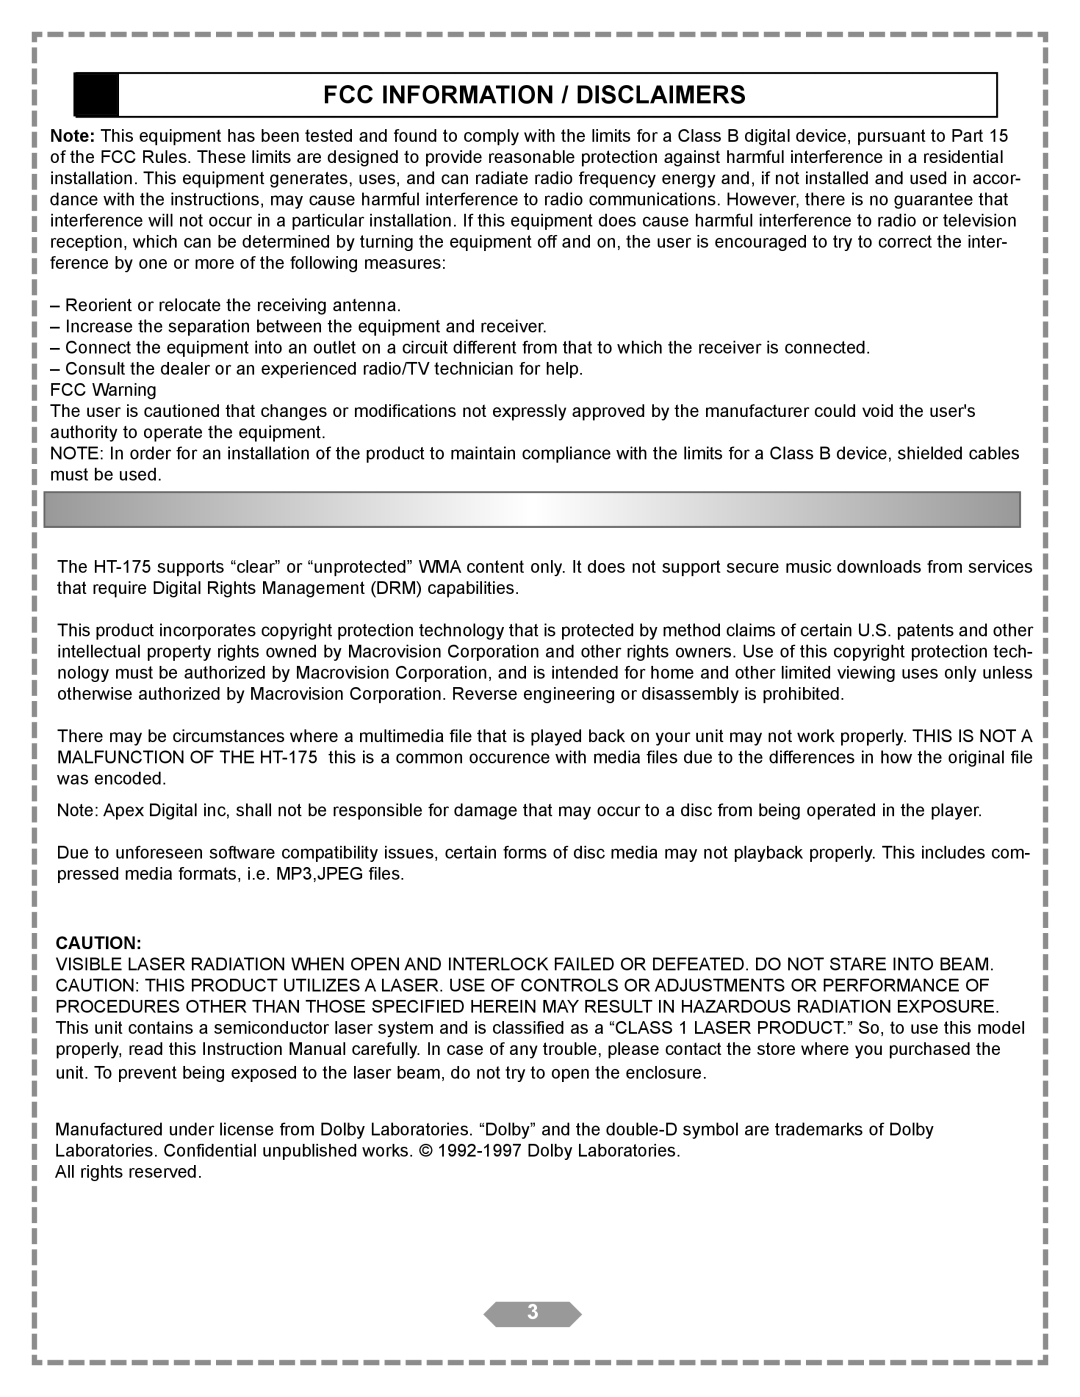 Apex Digital HT-175 manual Fcc Information / Disclaimers 